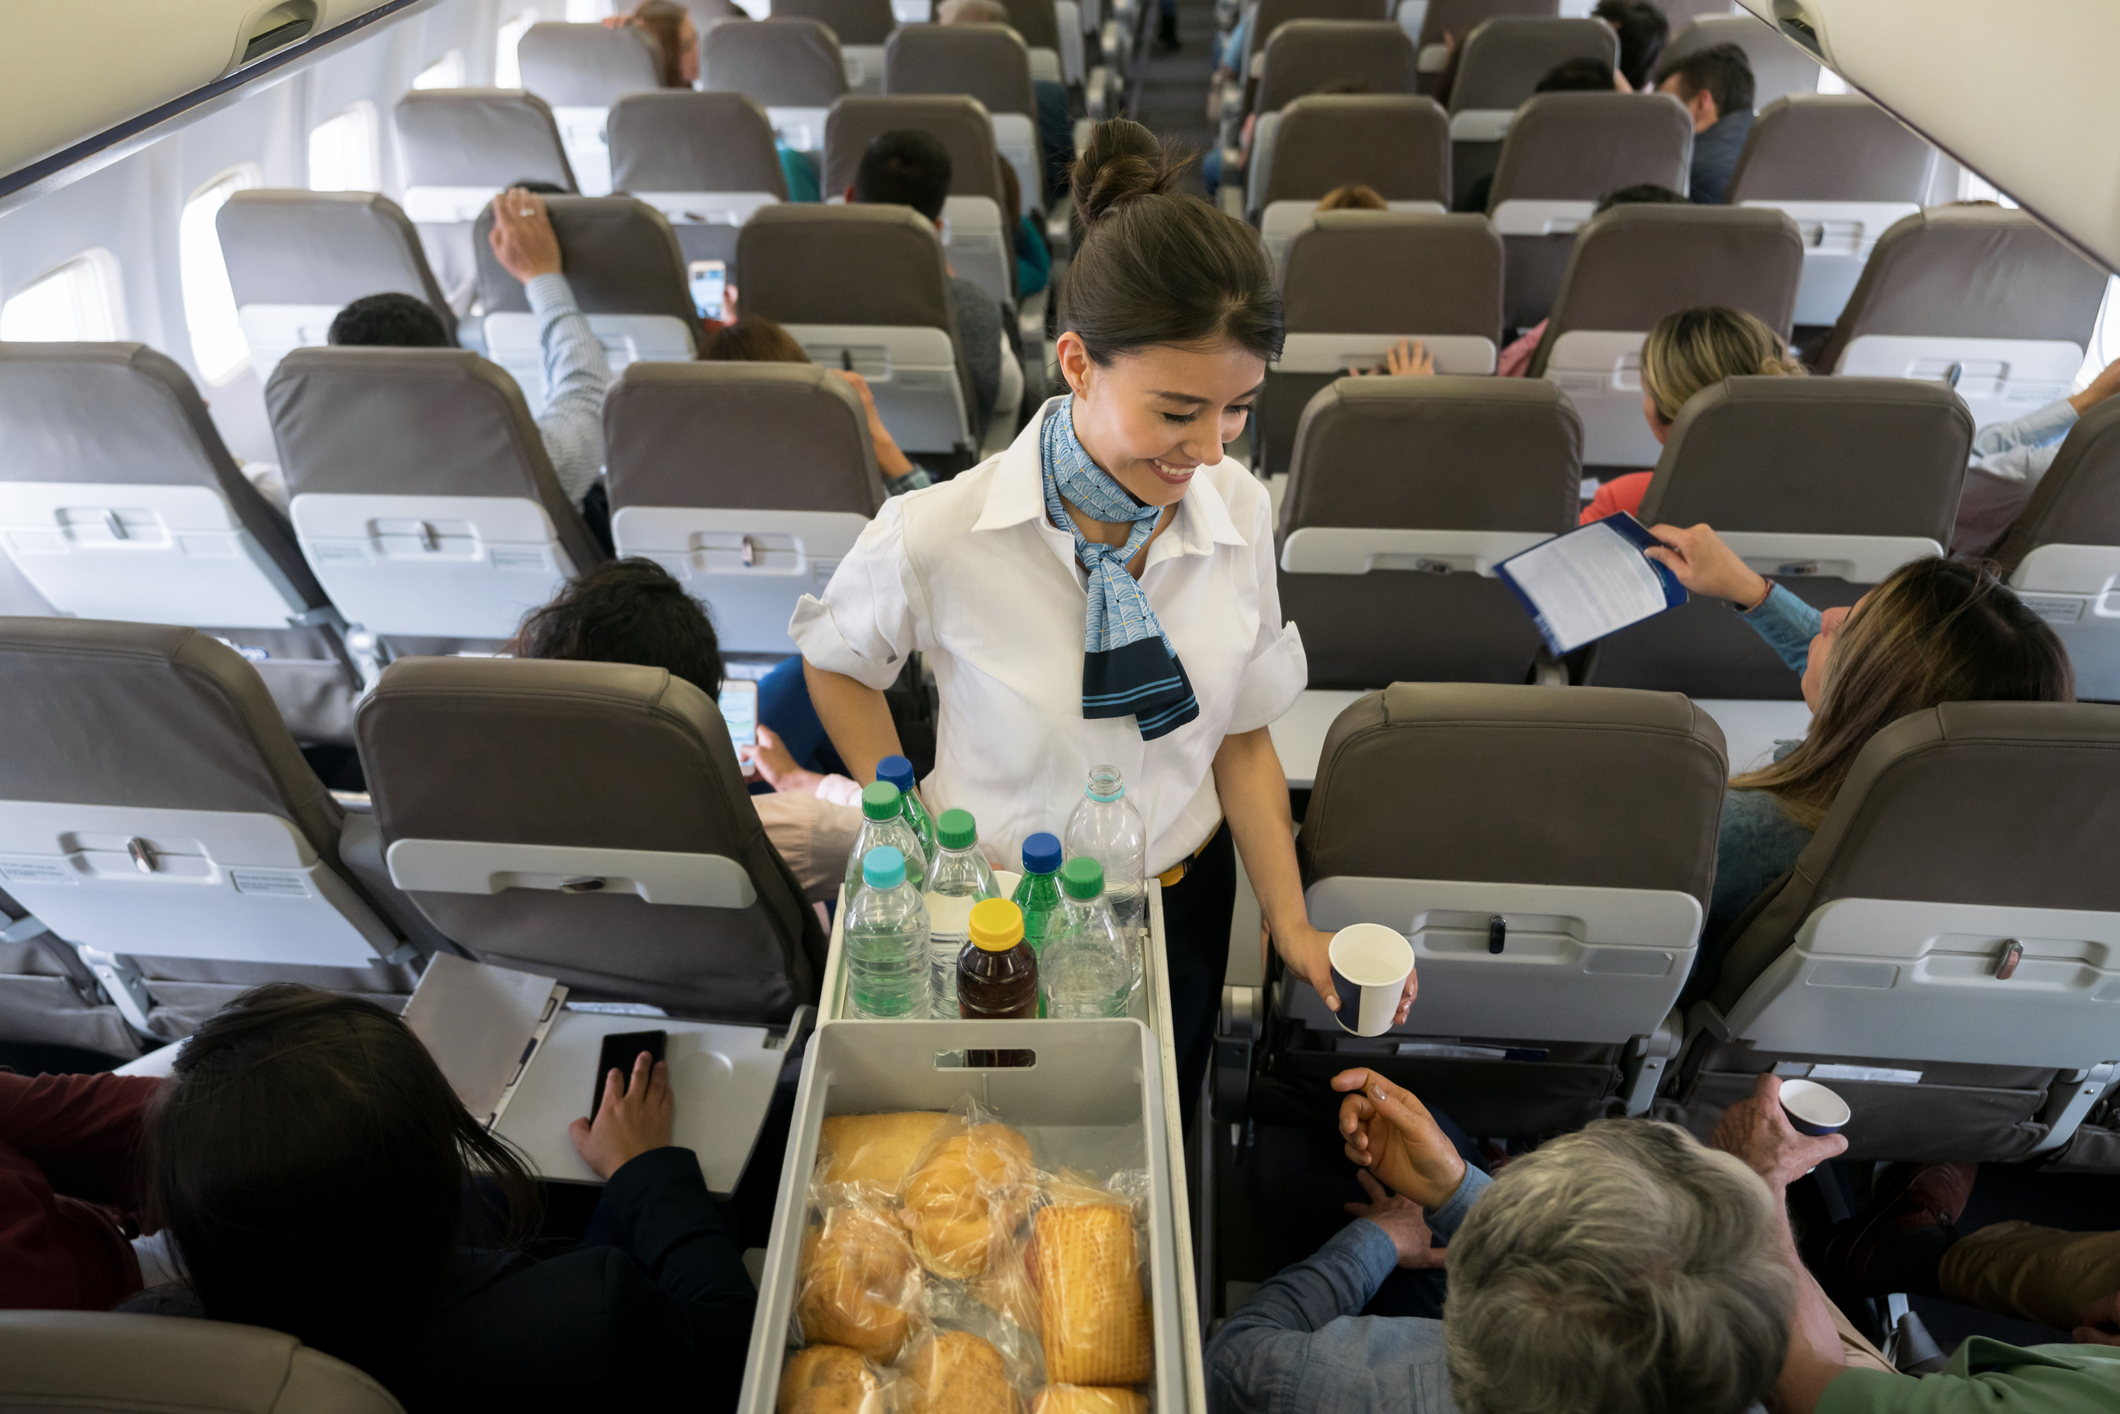 A smiling flight attendant hands a drink to a passenger.